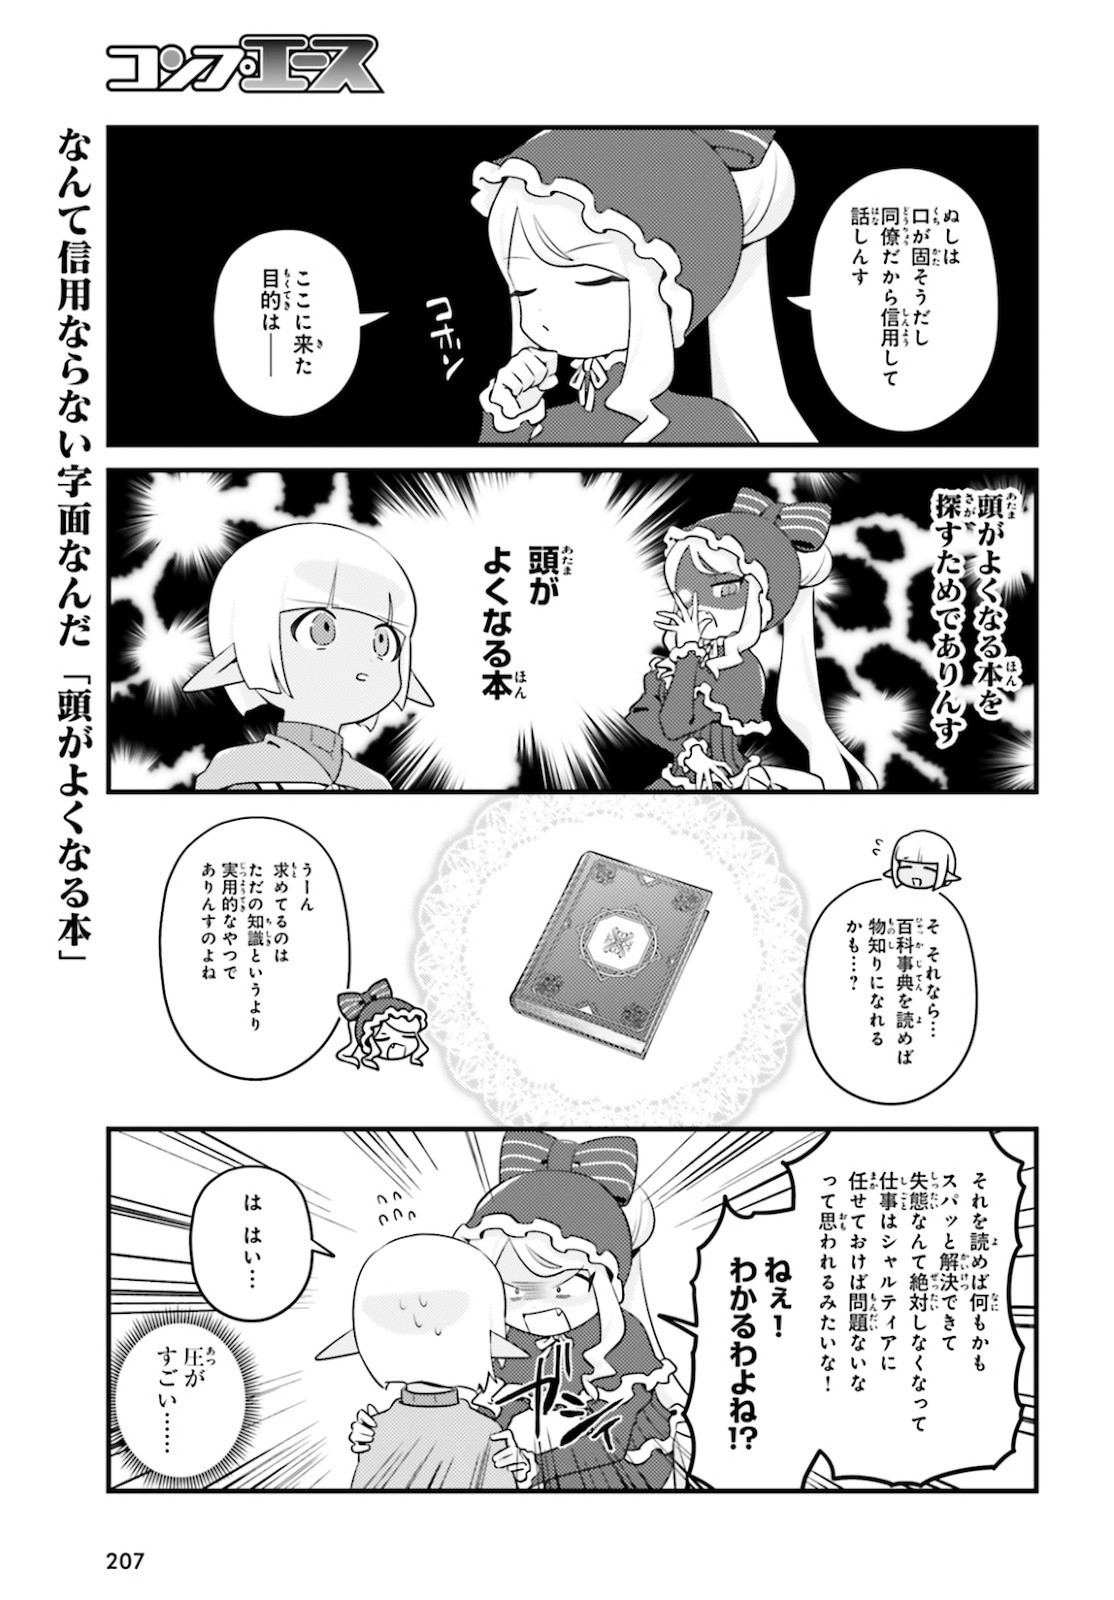 Overlord-Fushisha-no-Oh - Chapter 43 - Page 3